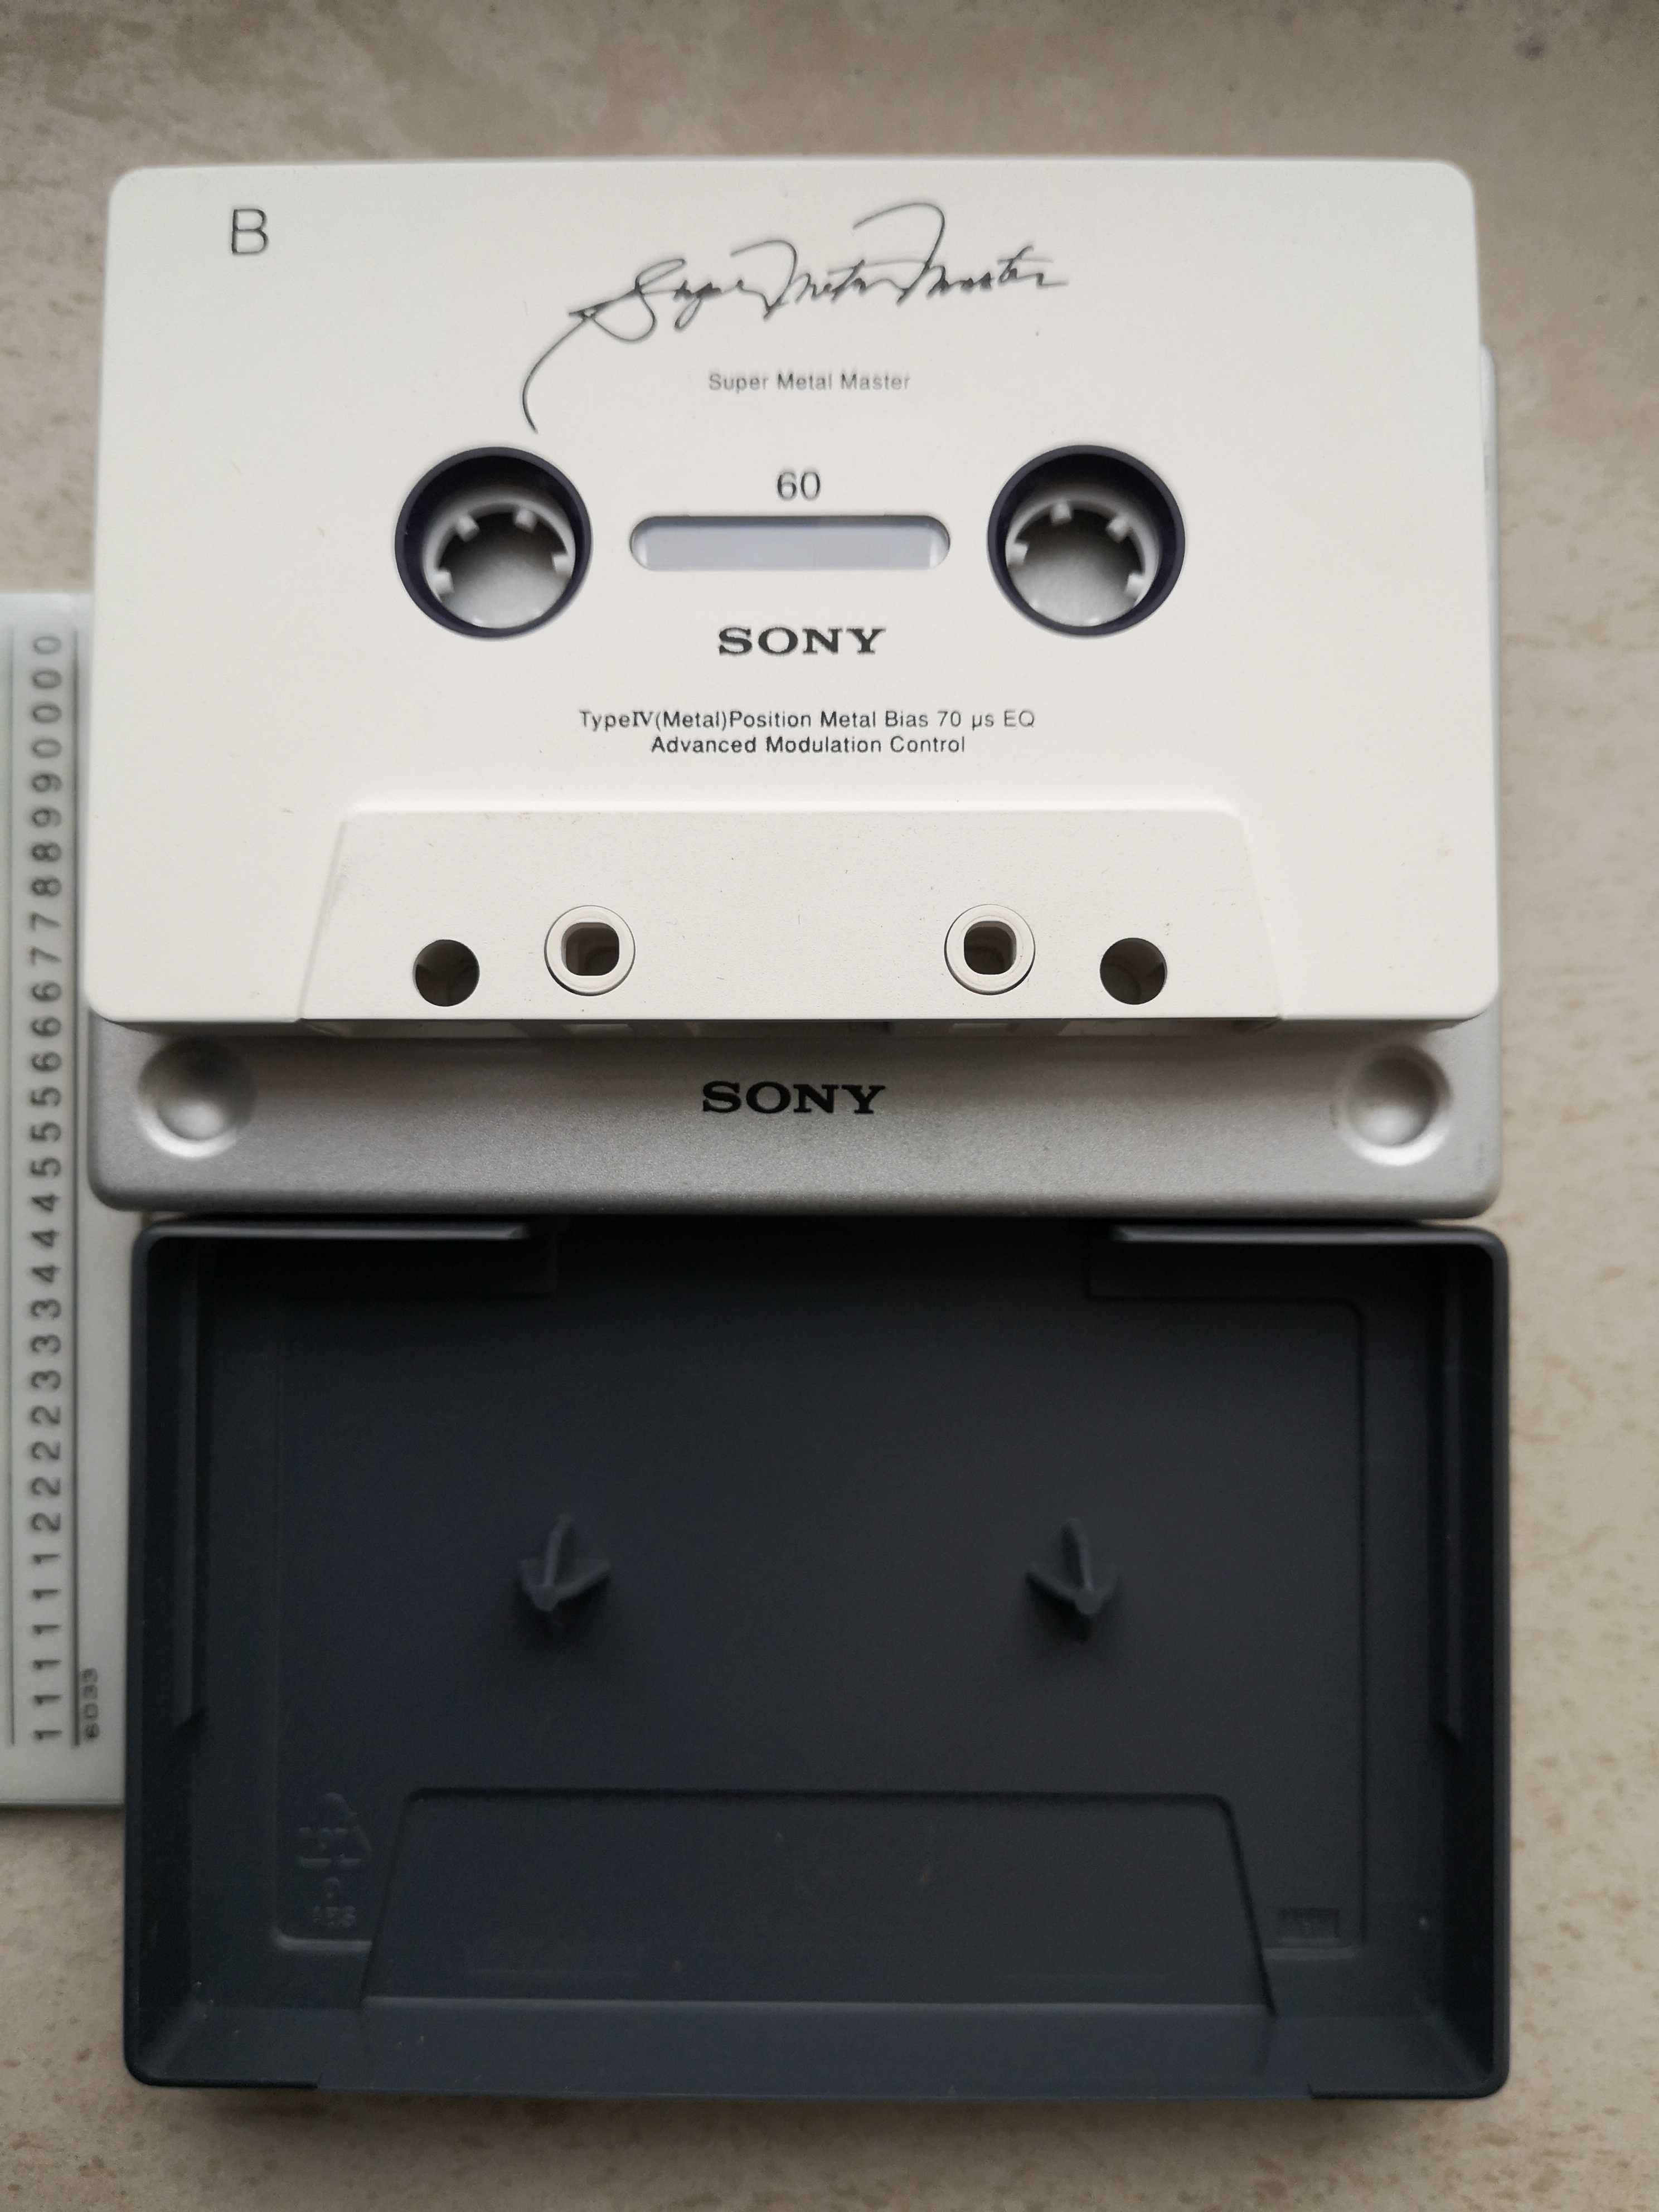 нова керамична колекционерска касета Сони - супер метал мастер 60